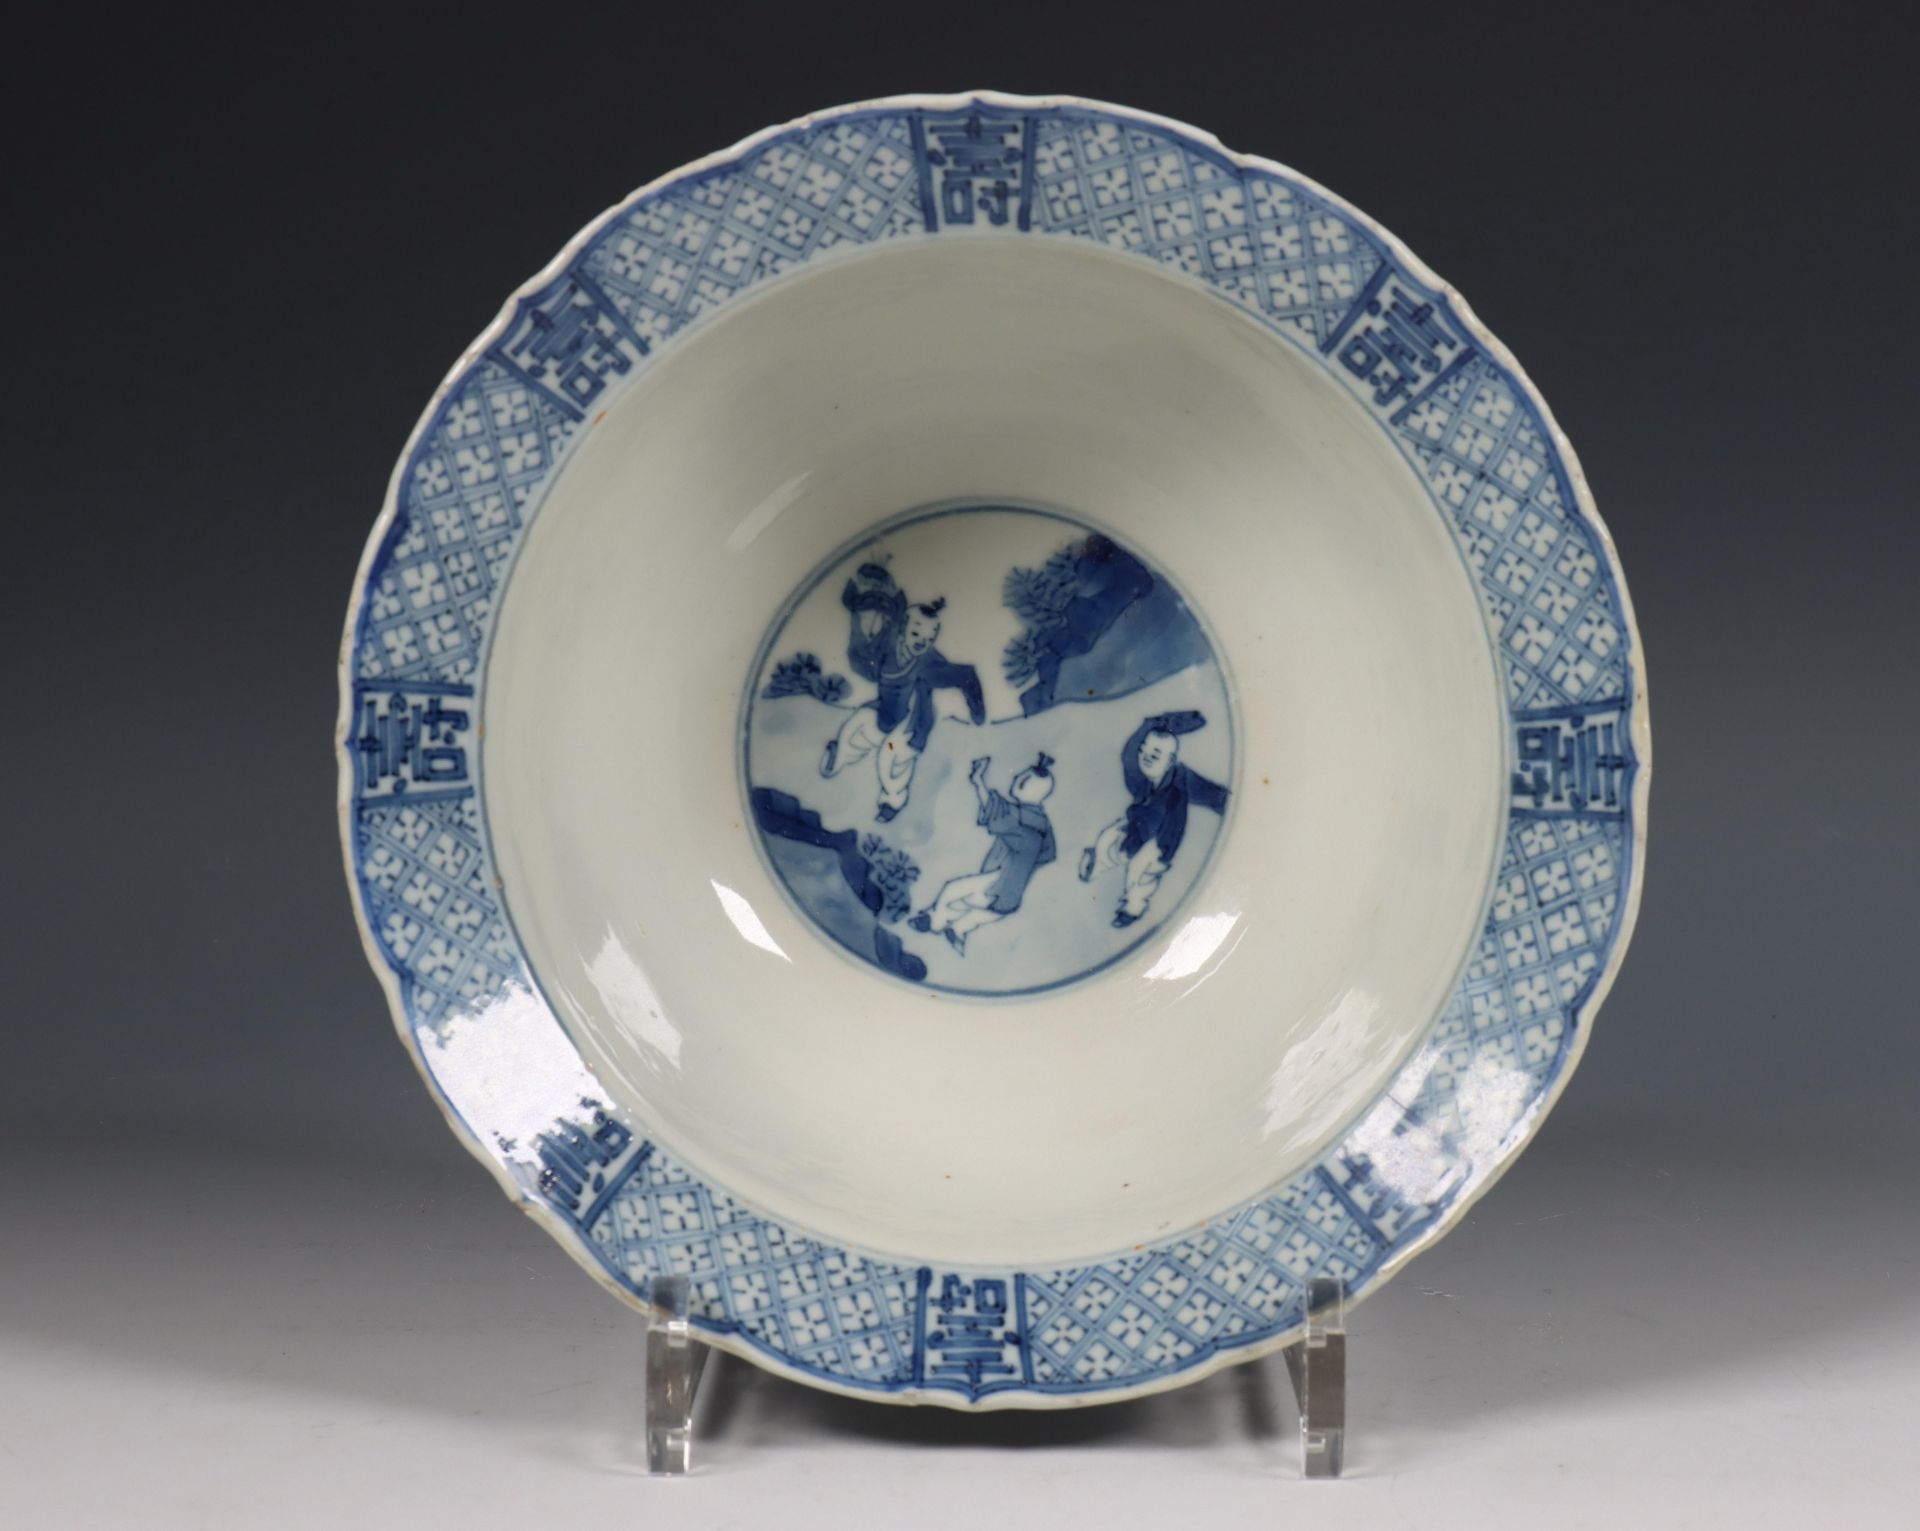 China, blauw-wit porseleinen kom, Kangxi zeskarakter merk en uit de periode (1662-1722), - Bild 3 aus 8